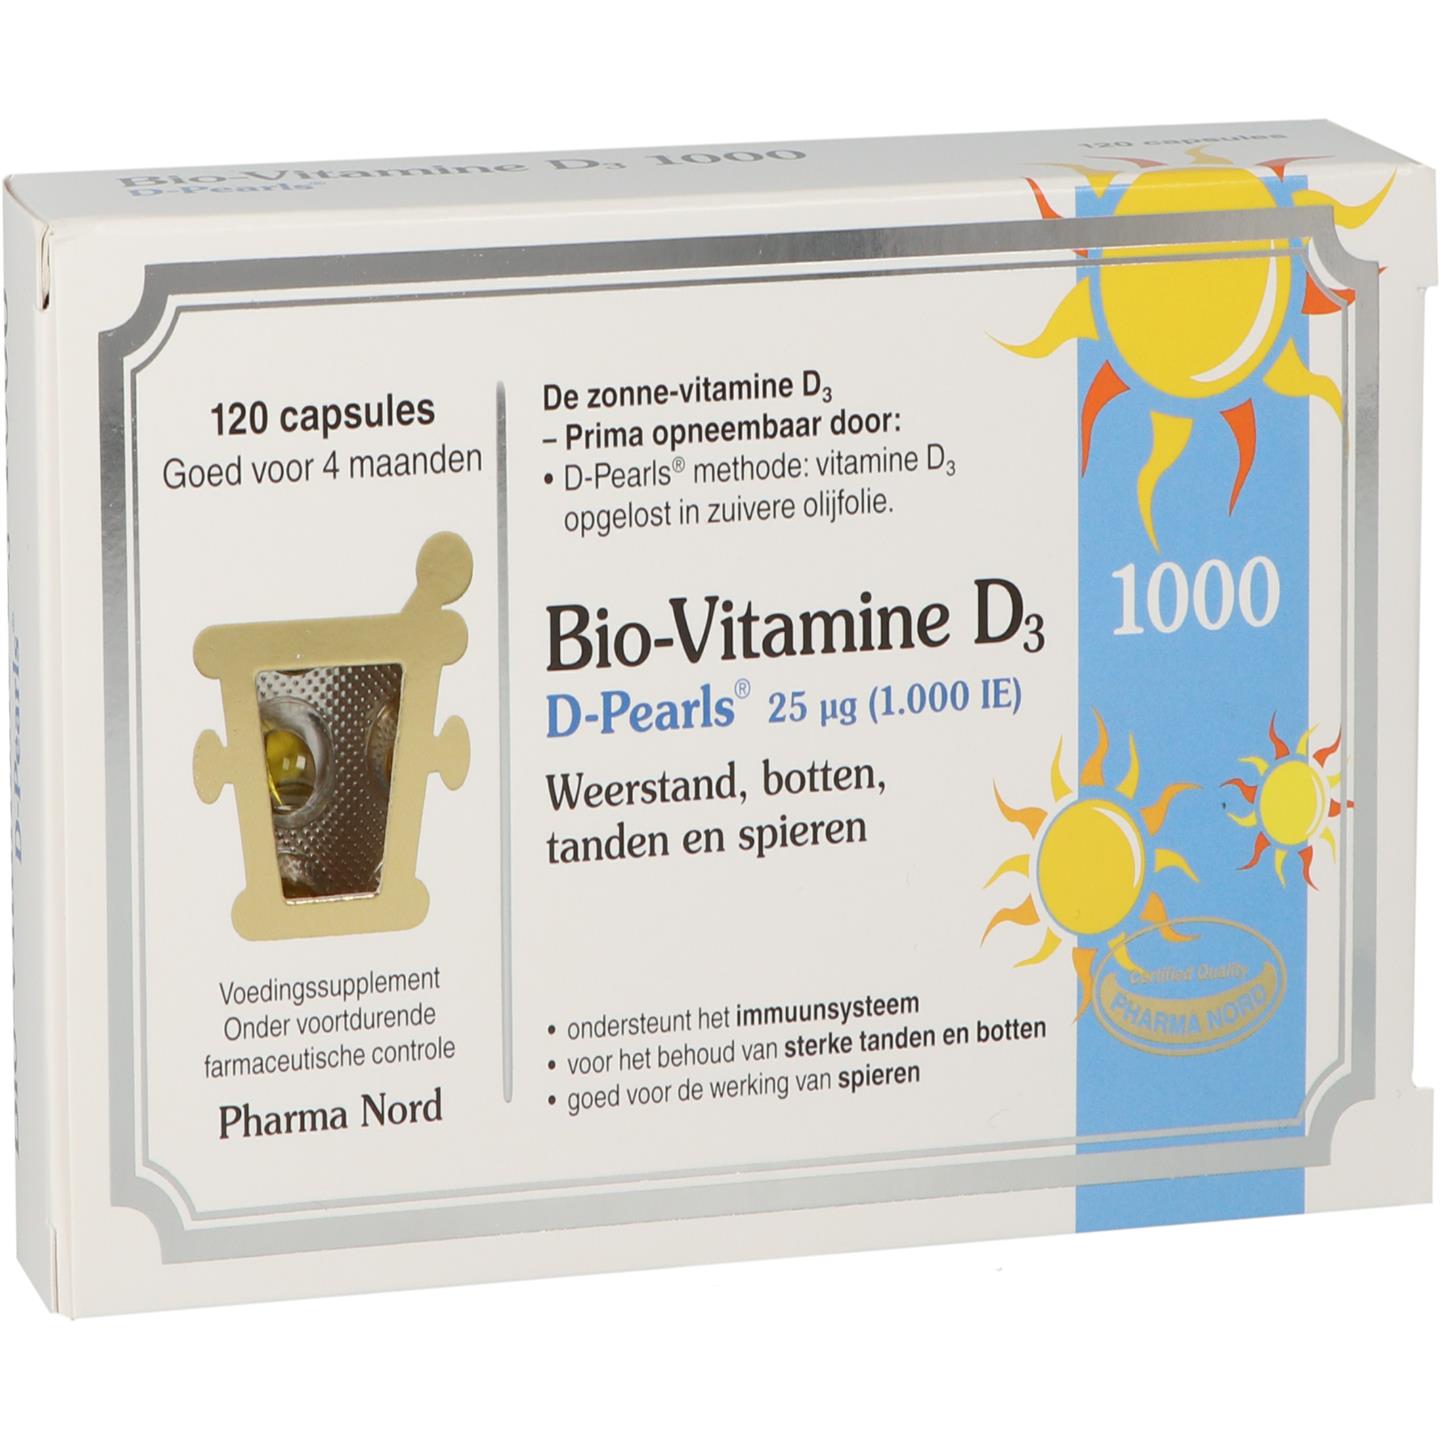 massa Neerduwen offset Bio-Vitamine D3 (1000 IE) (Pharma Nord)